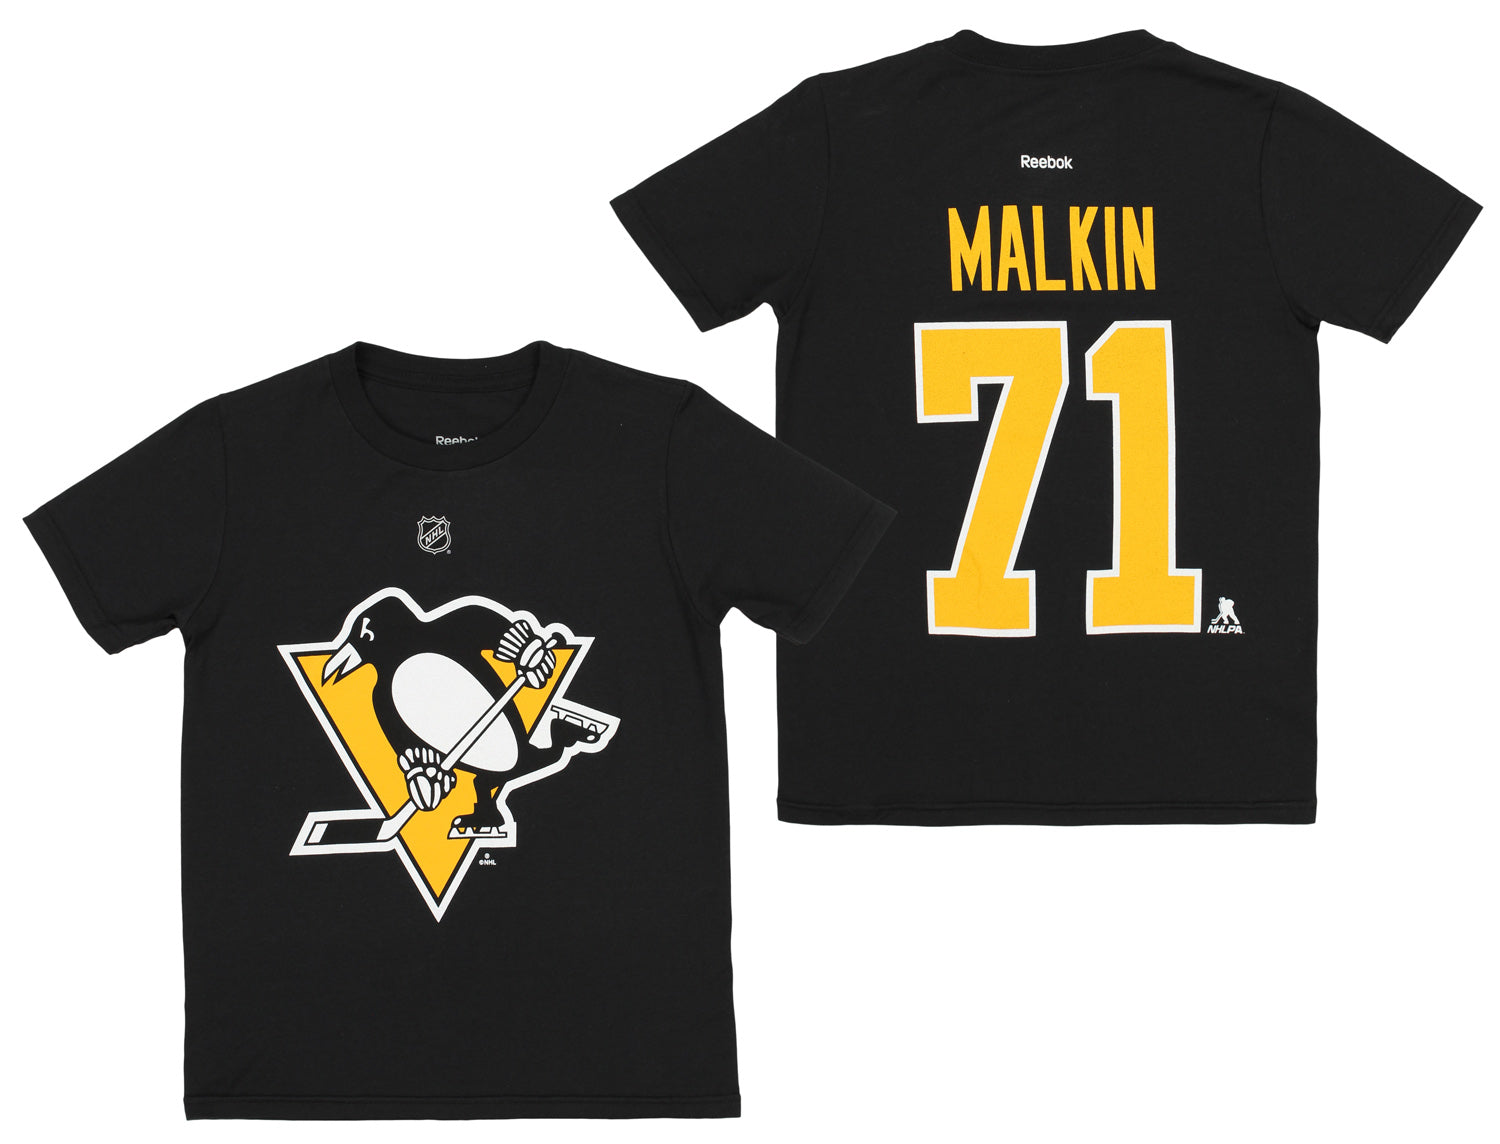 Reebok NHL Youth Pittsburgh Penguins Evgeni Malkin #71 Replica Jersey, Black